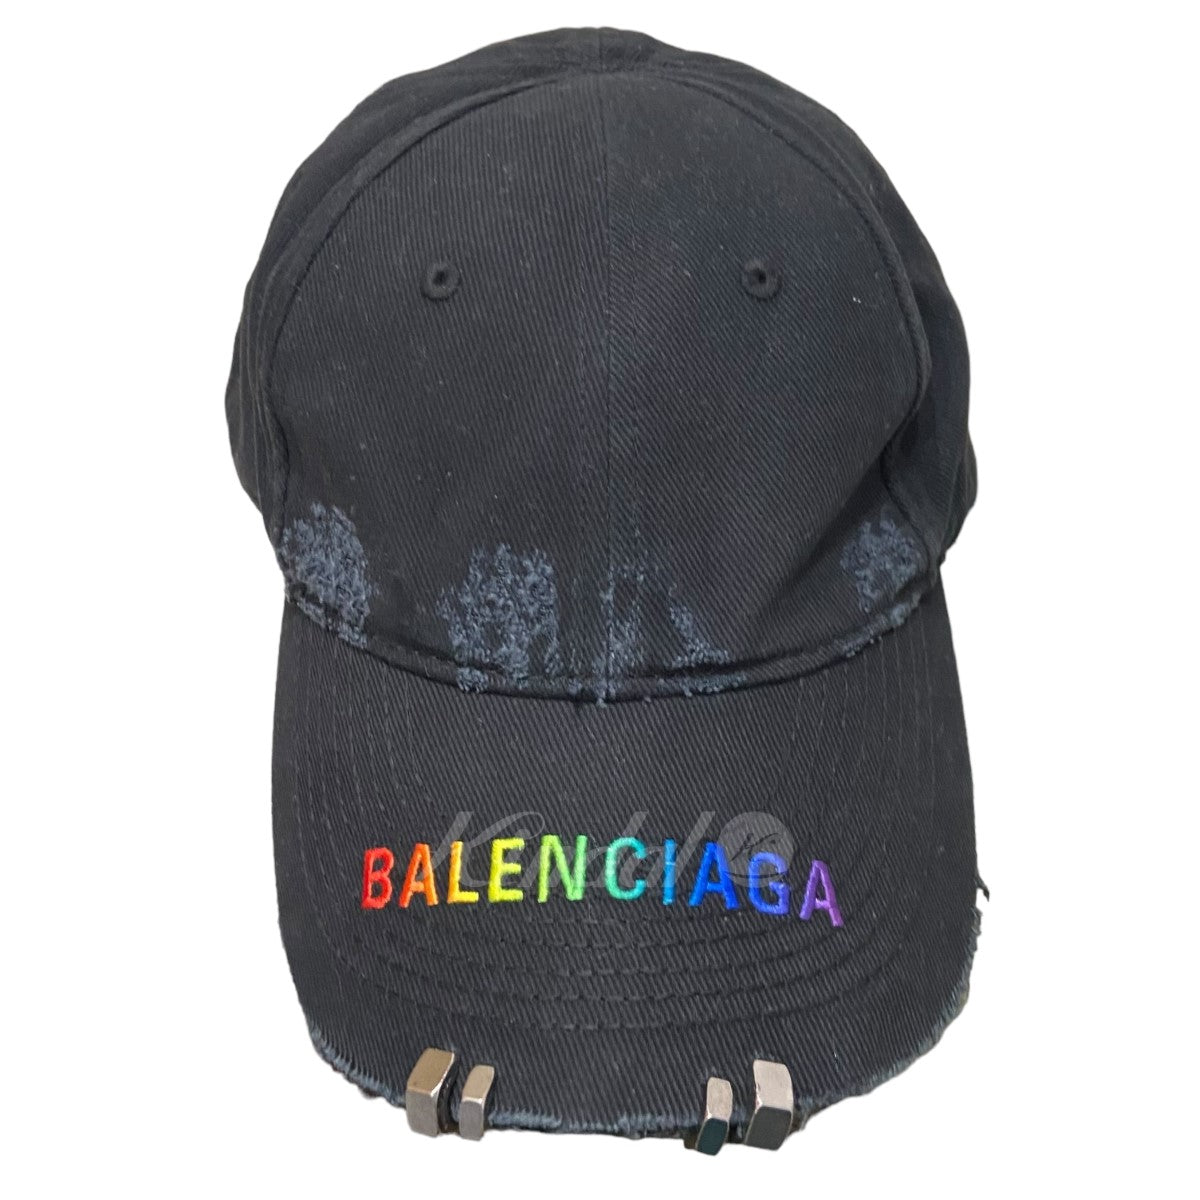 BALENCIAGA(バレンシアガ) レインボーロゴキャップ 766862 ブラック 